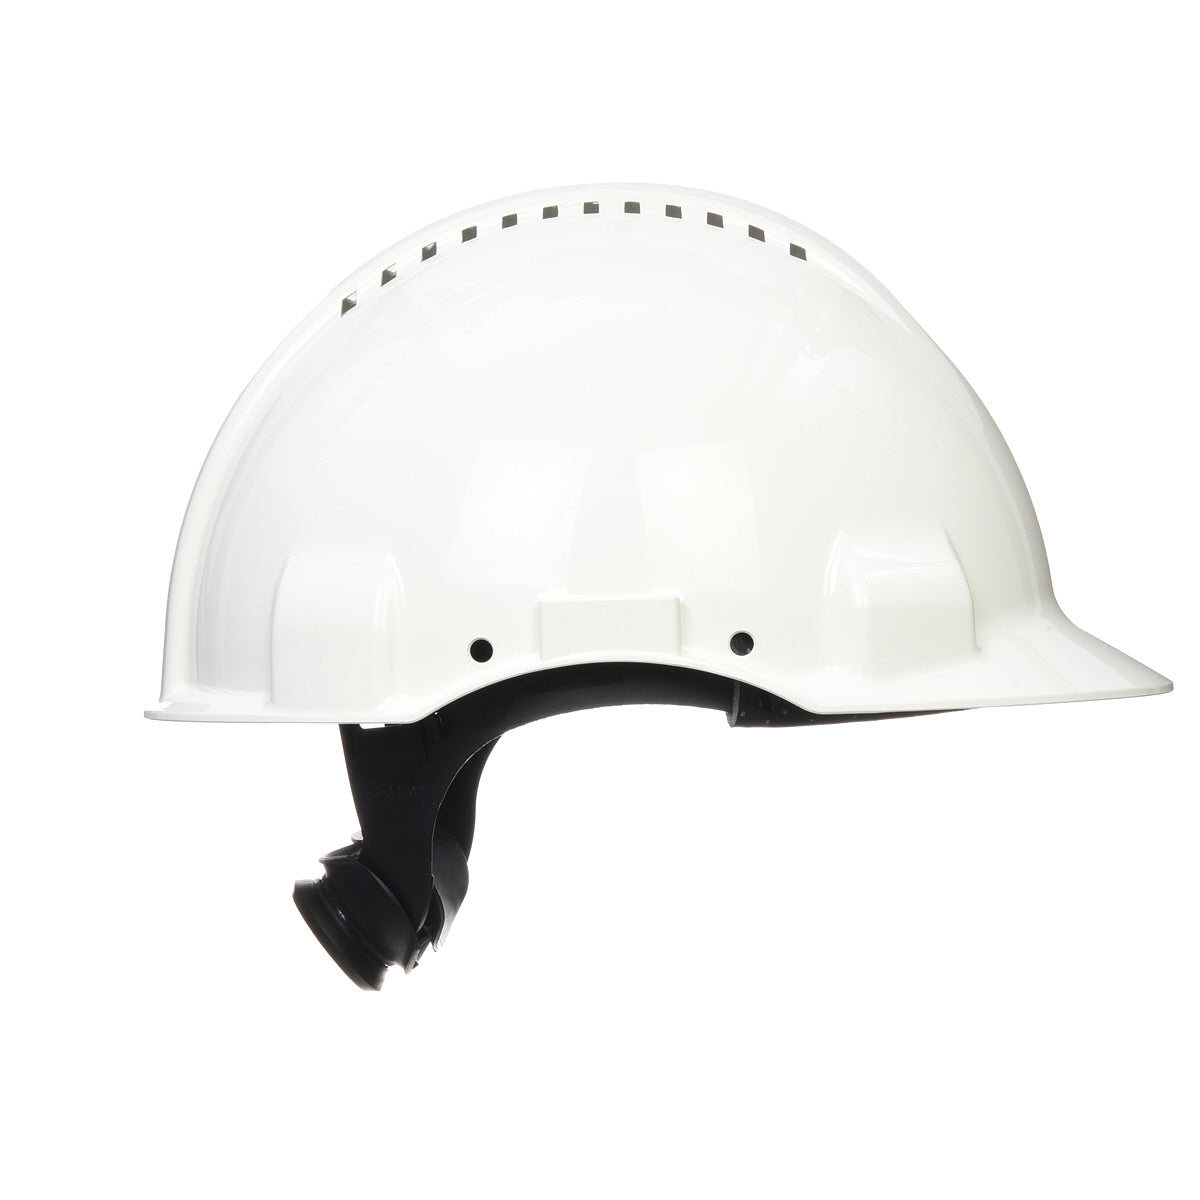 3M™ G3000 Safety Helmet